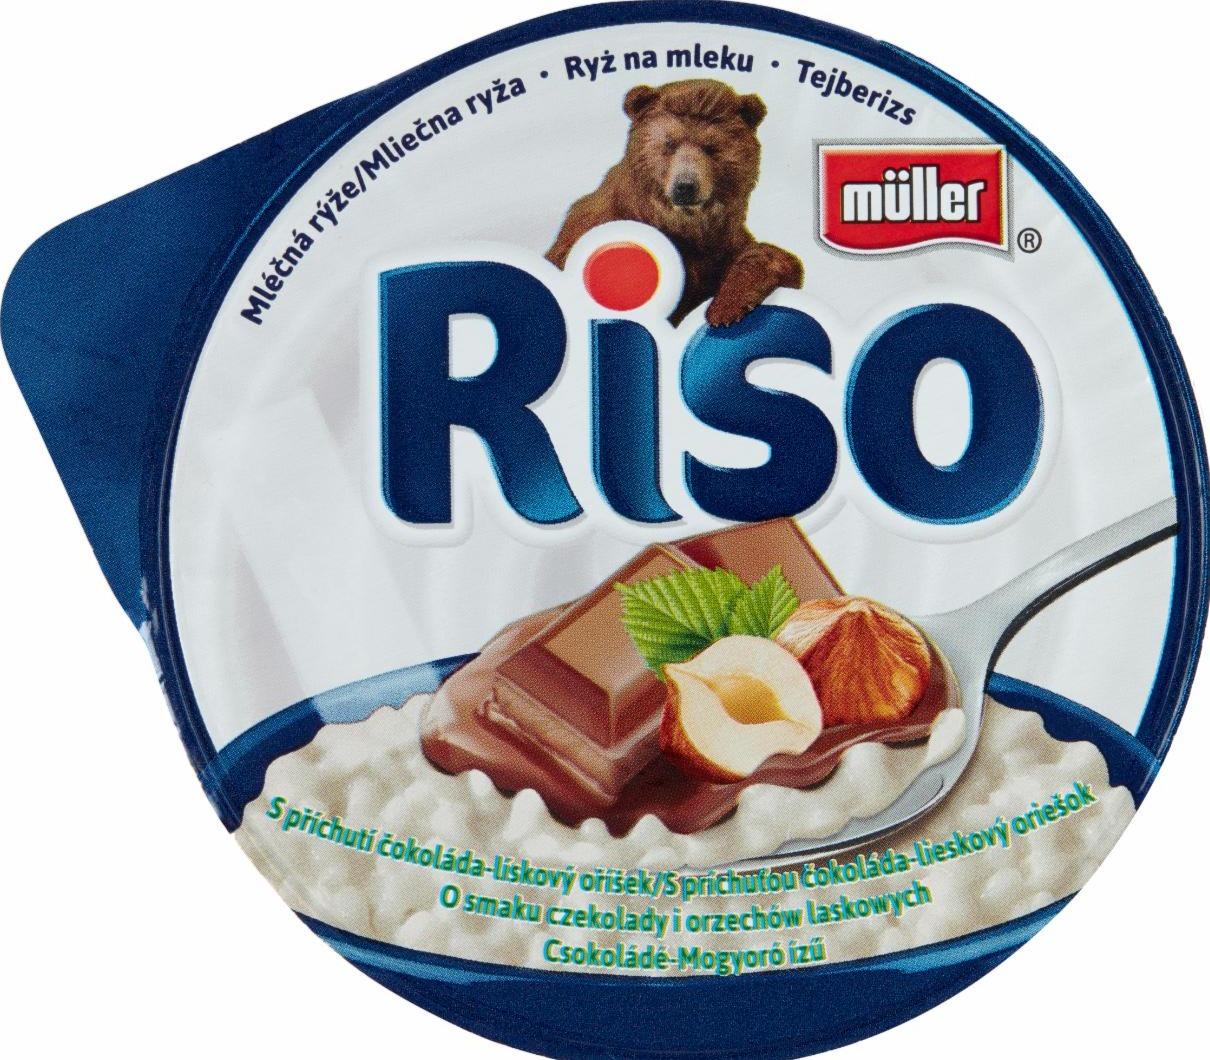 Фото - Riso Čokoláda-lískový ořech молочный рис со вкусом лесного ореха Müller